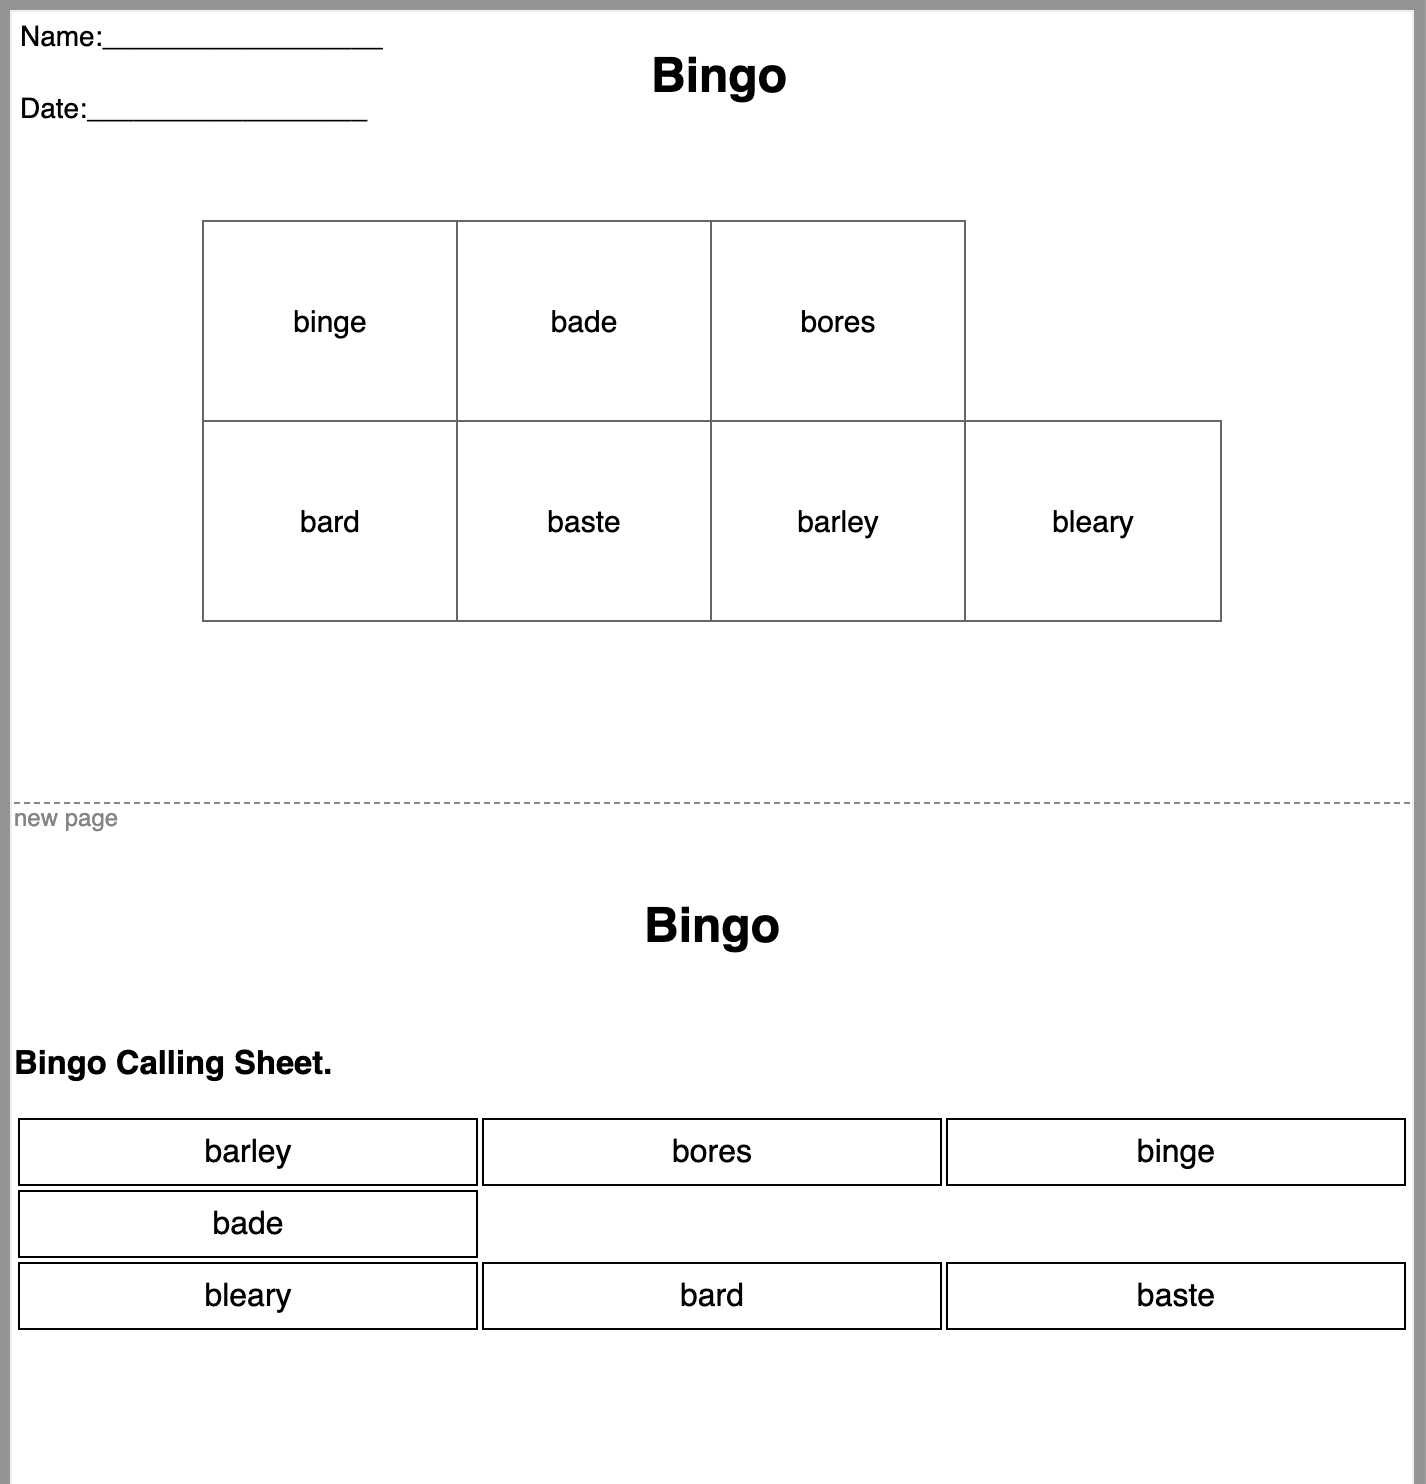 Bingo vocabulary and spelling